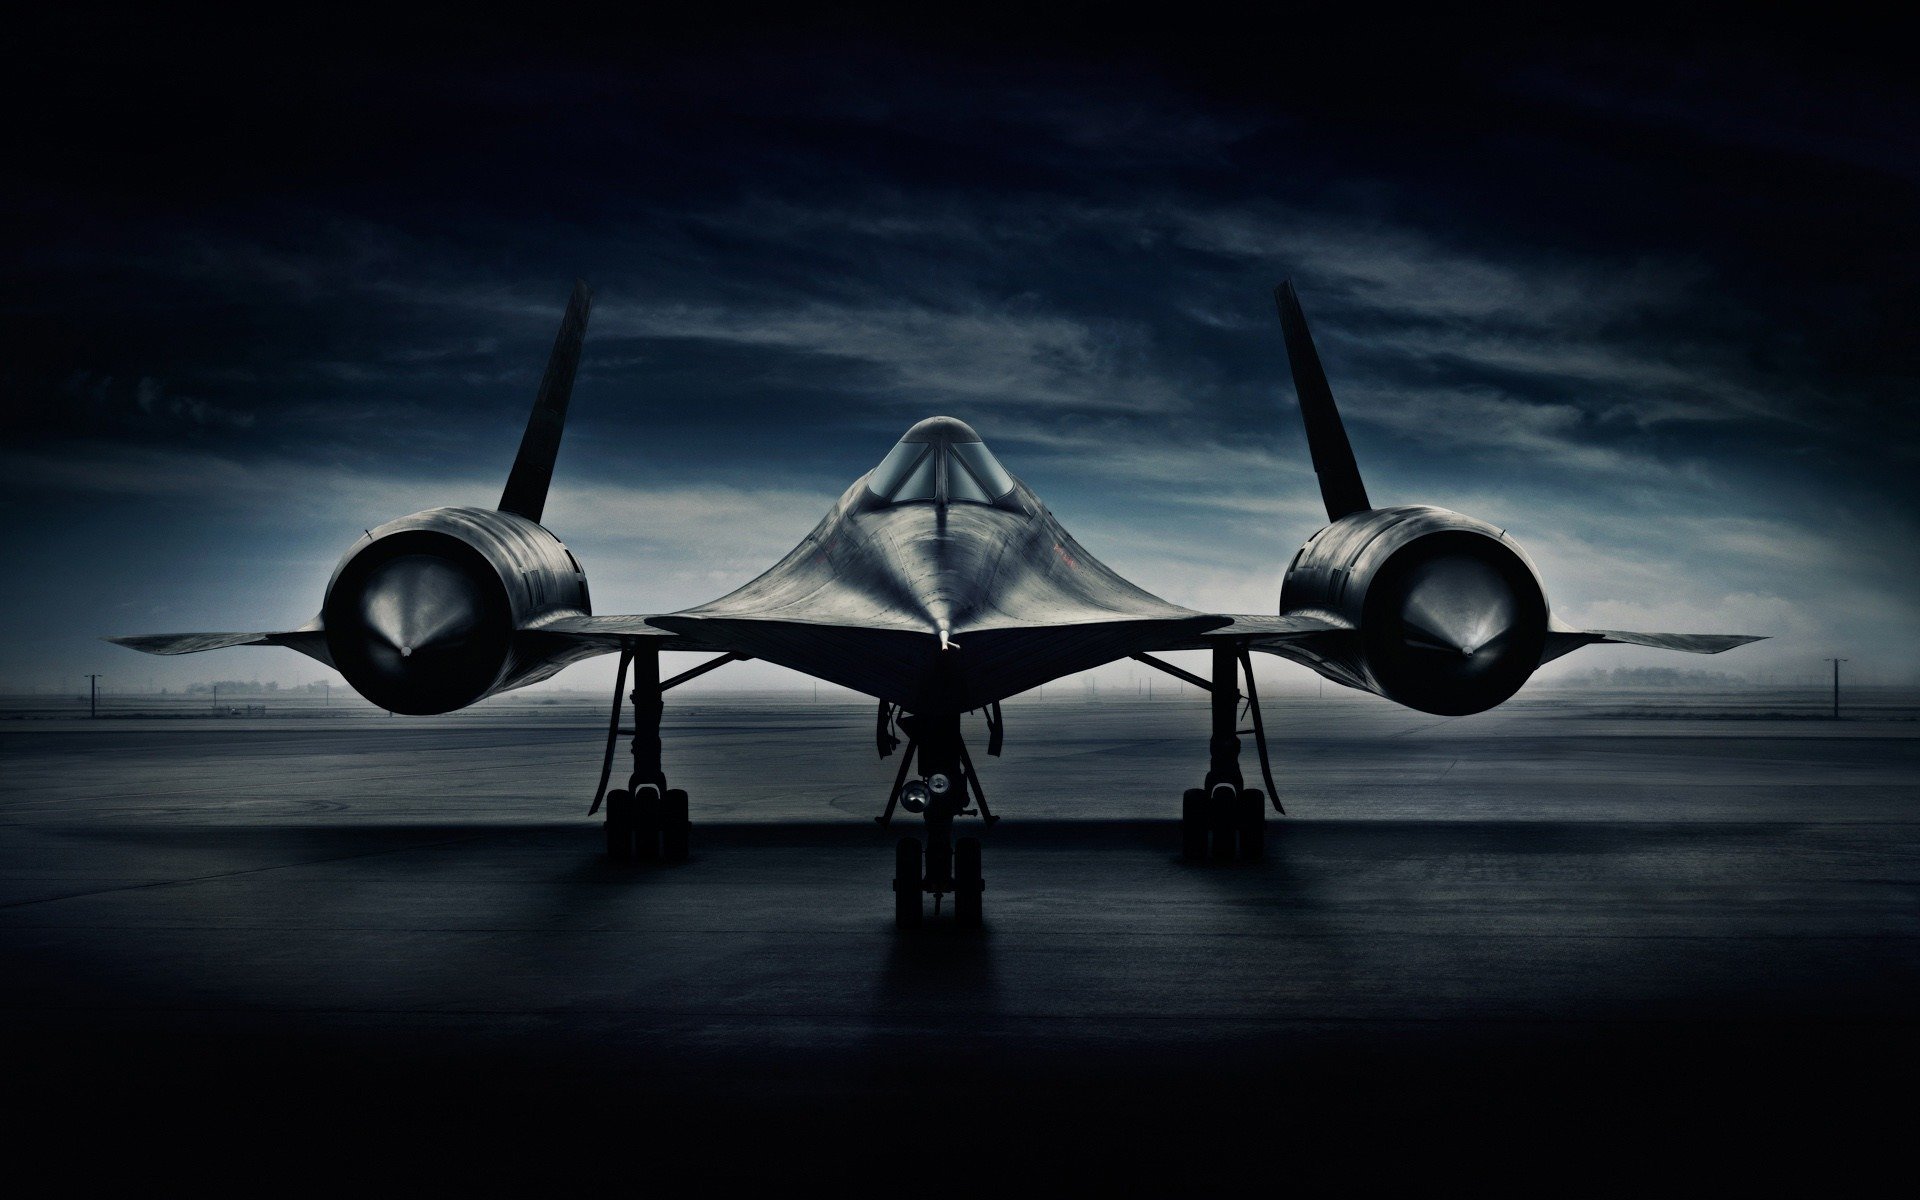 Does Lockheed Martin's stealthy SR-72 Darkstar spy plane have a